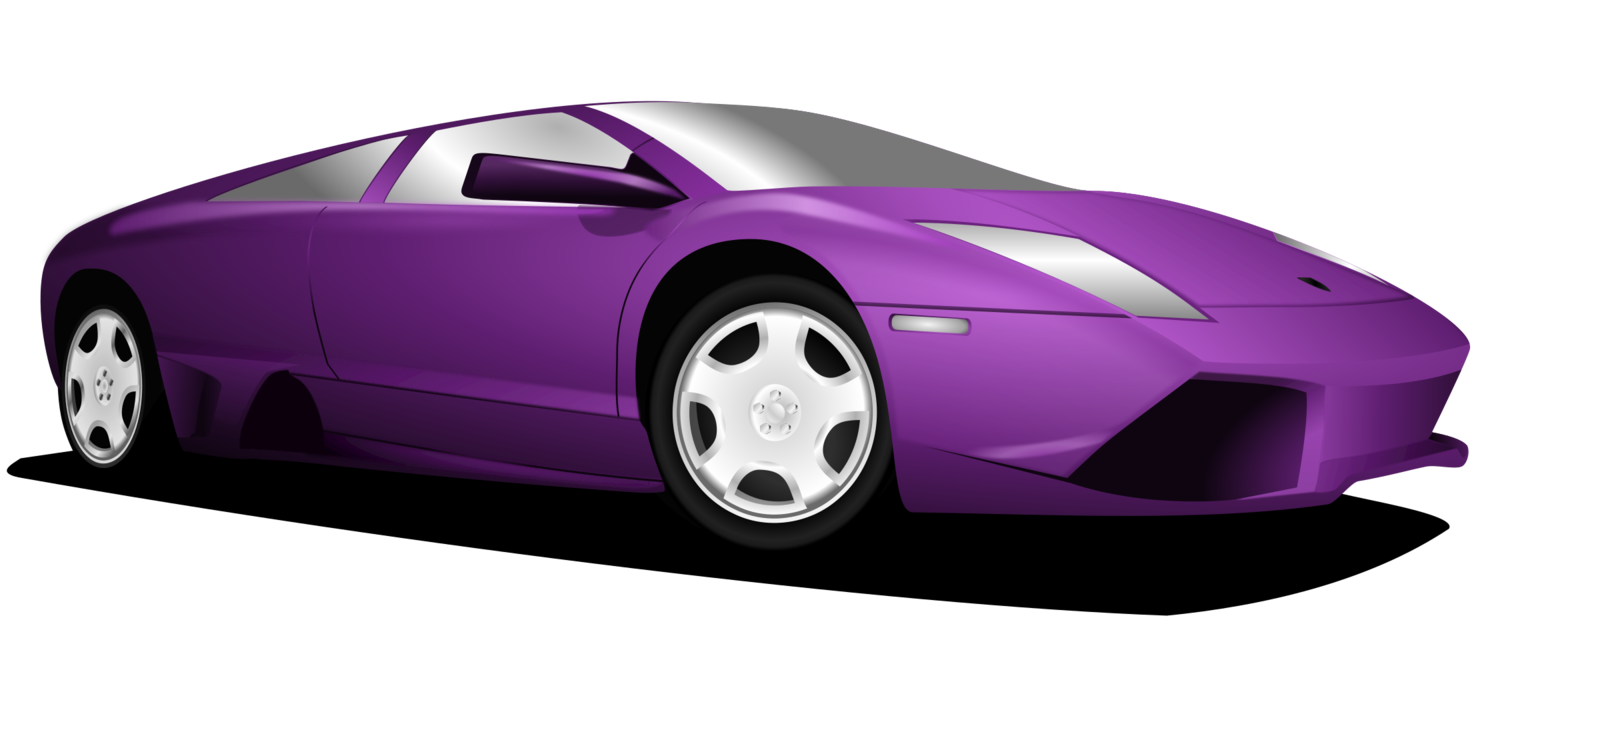 Lamborghini,Automotive Exterior,Compact Car